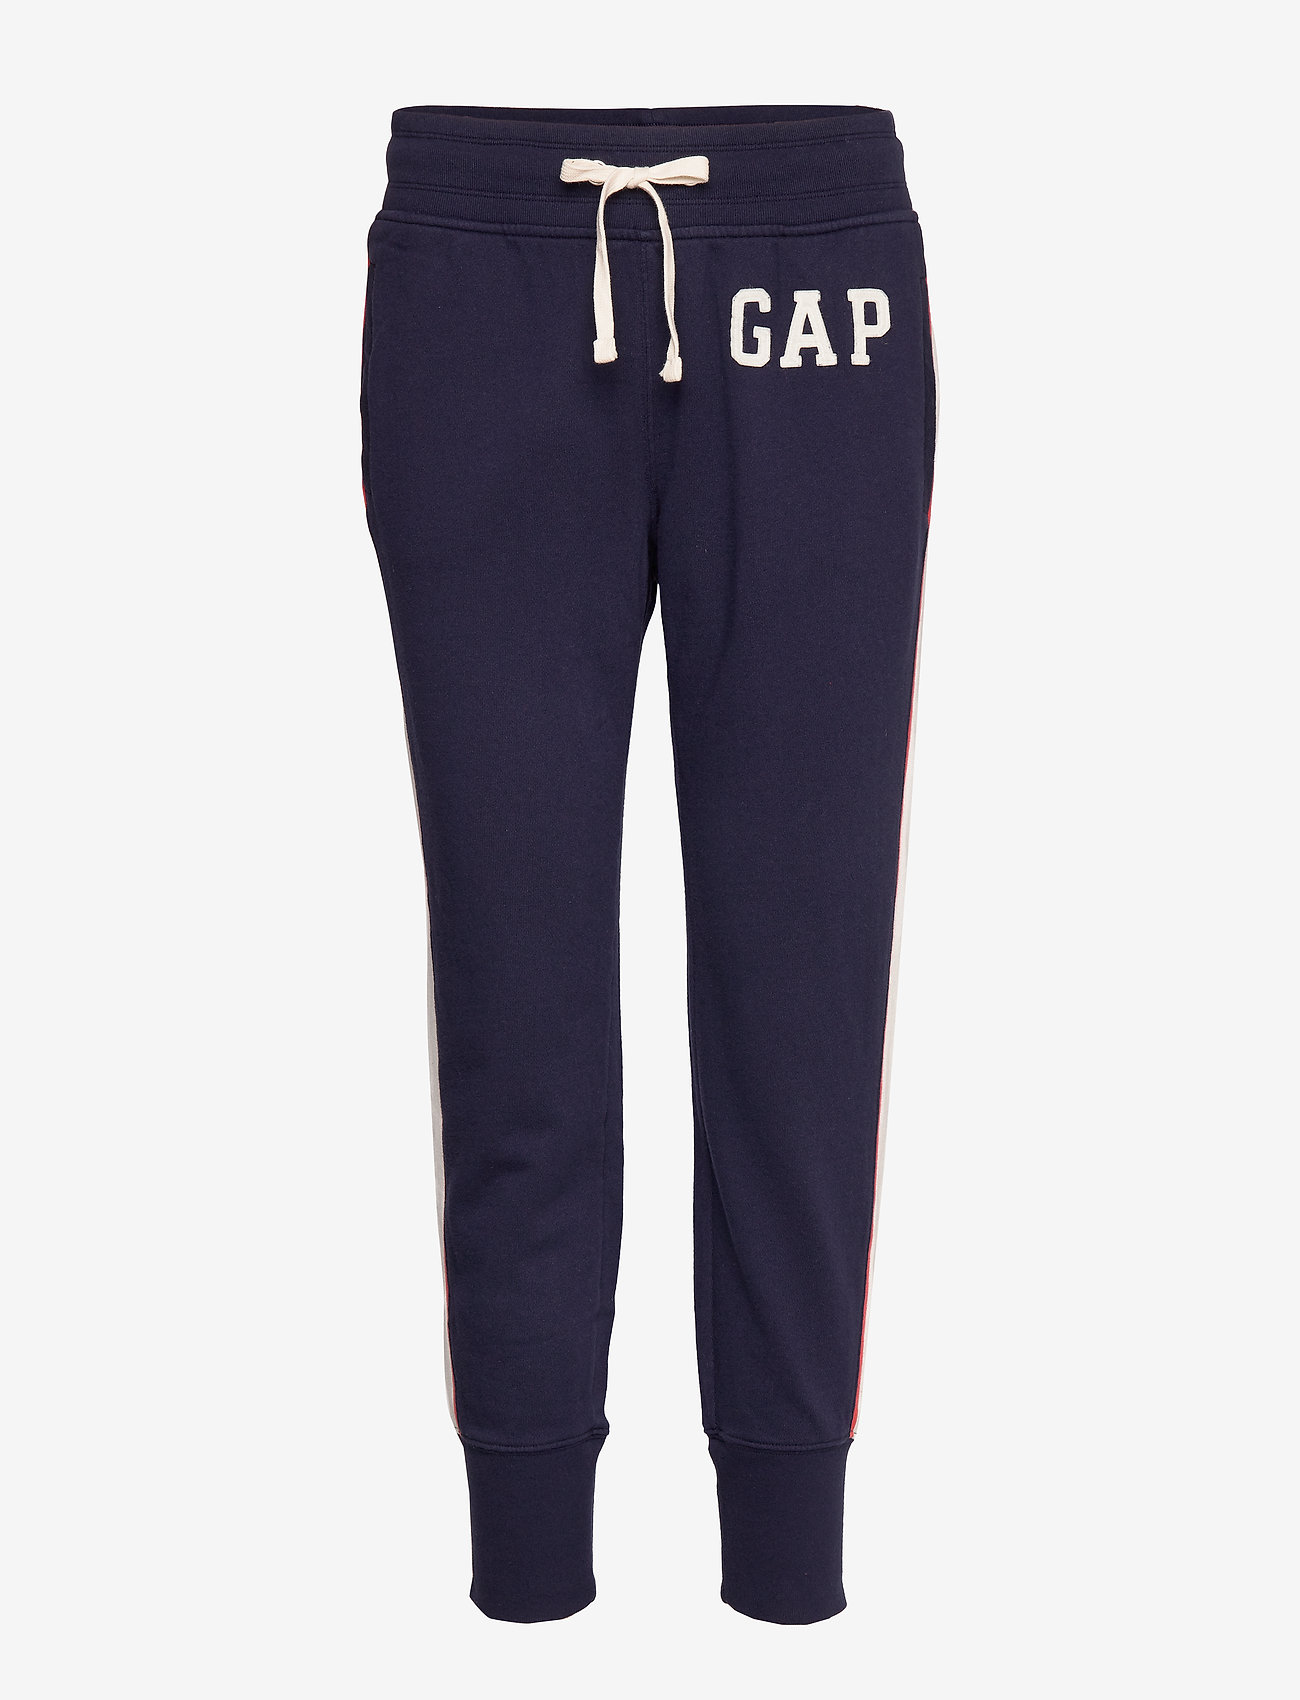 gap grey sweatpants